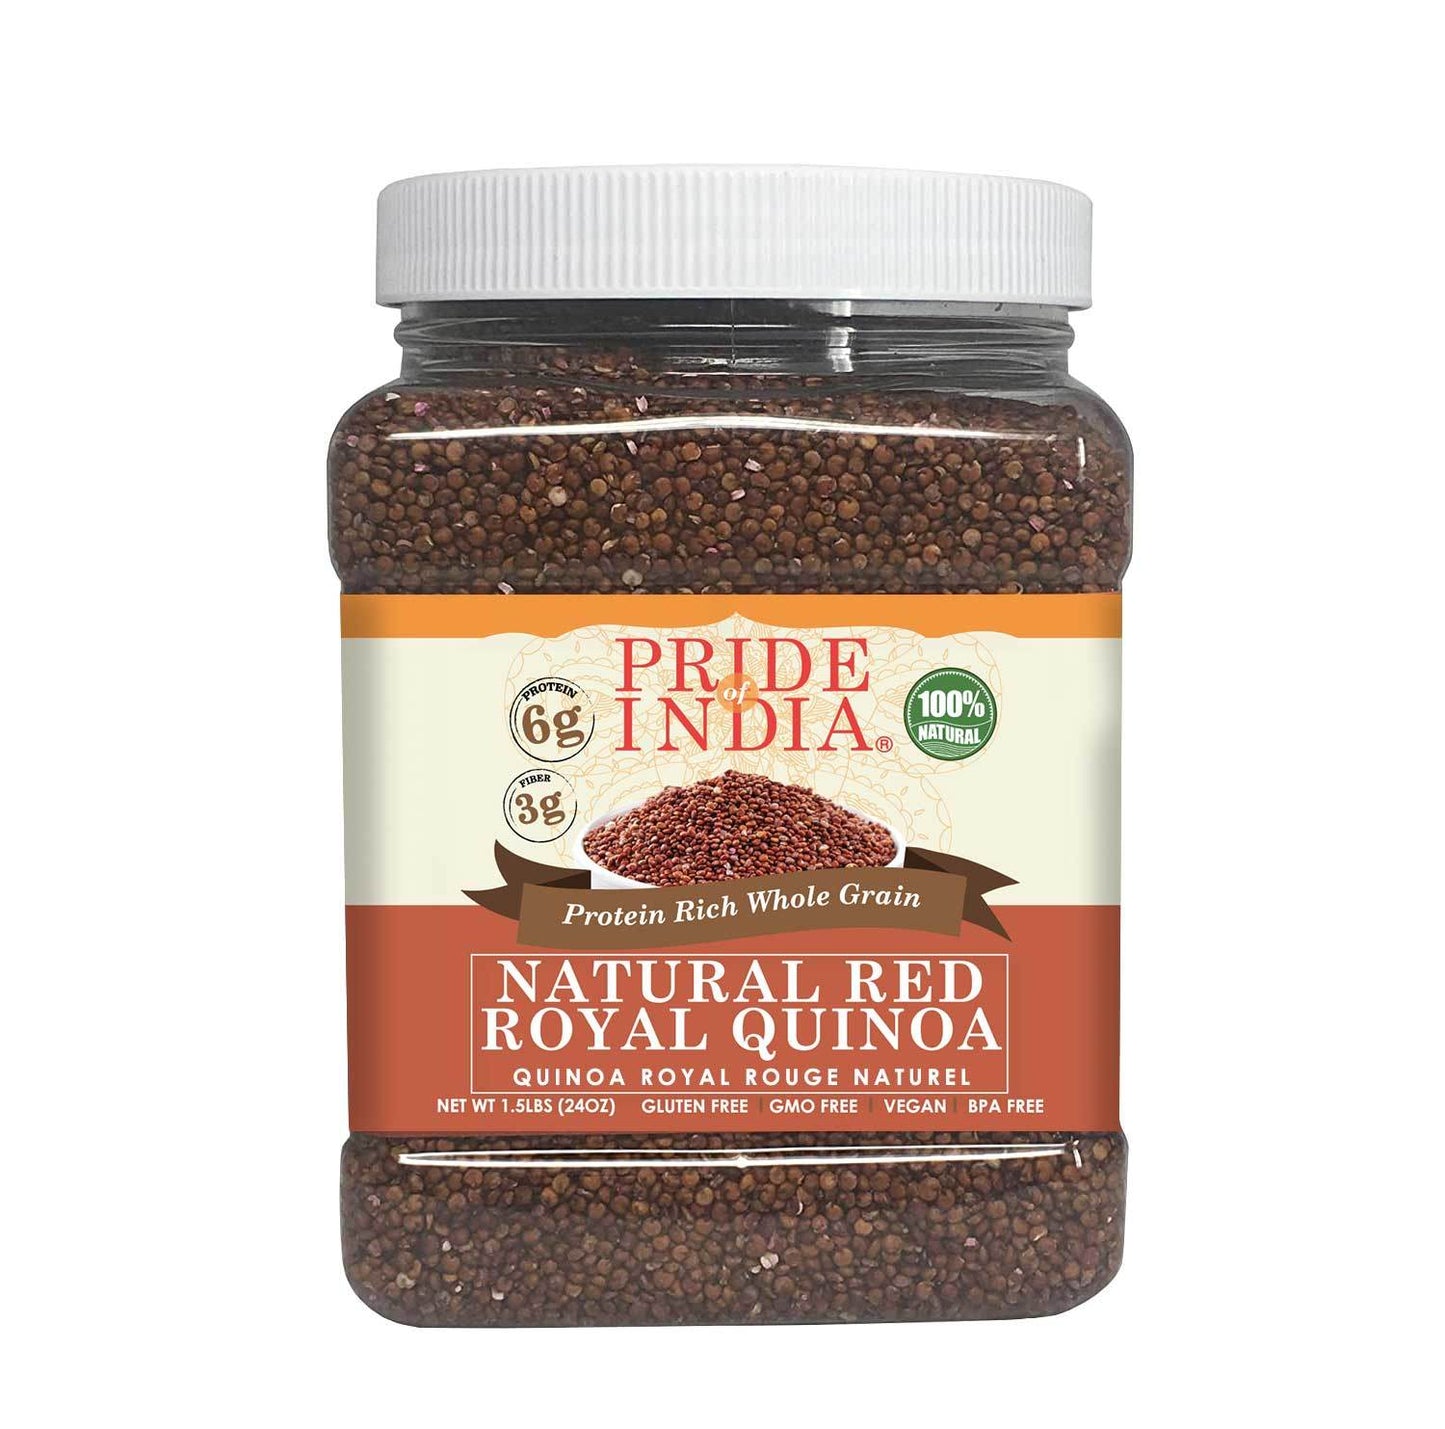 Natural Red Royal Quinoa - 100% Bolivian Superior Grade Protein Rich